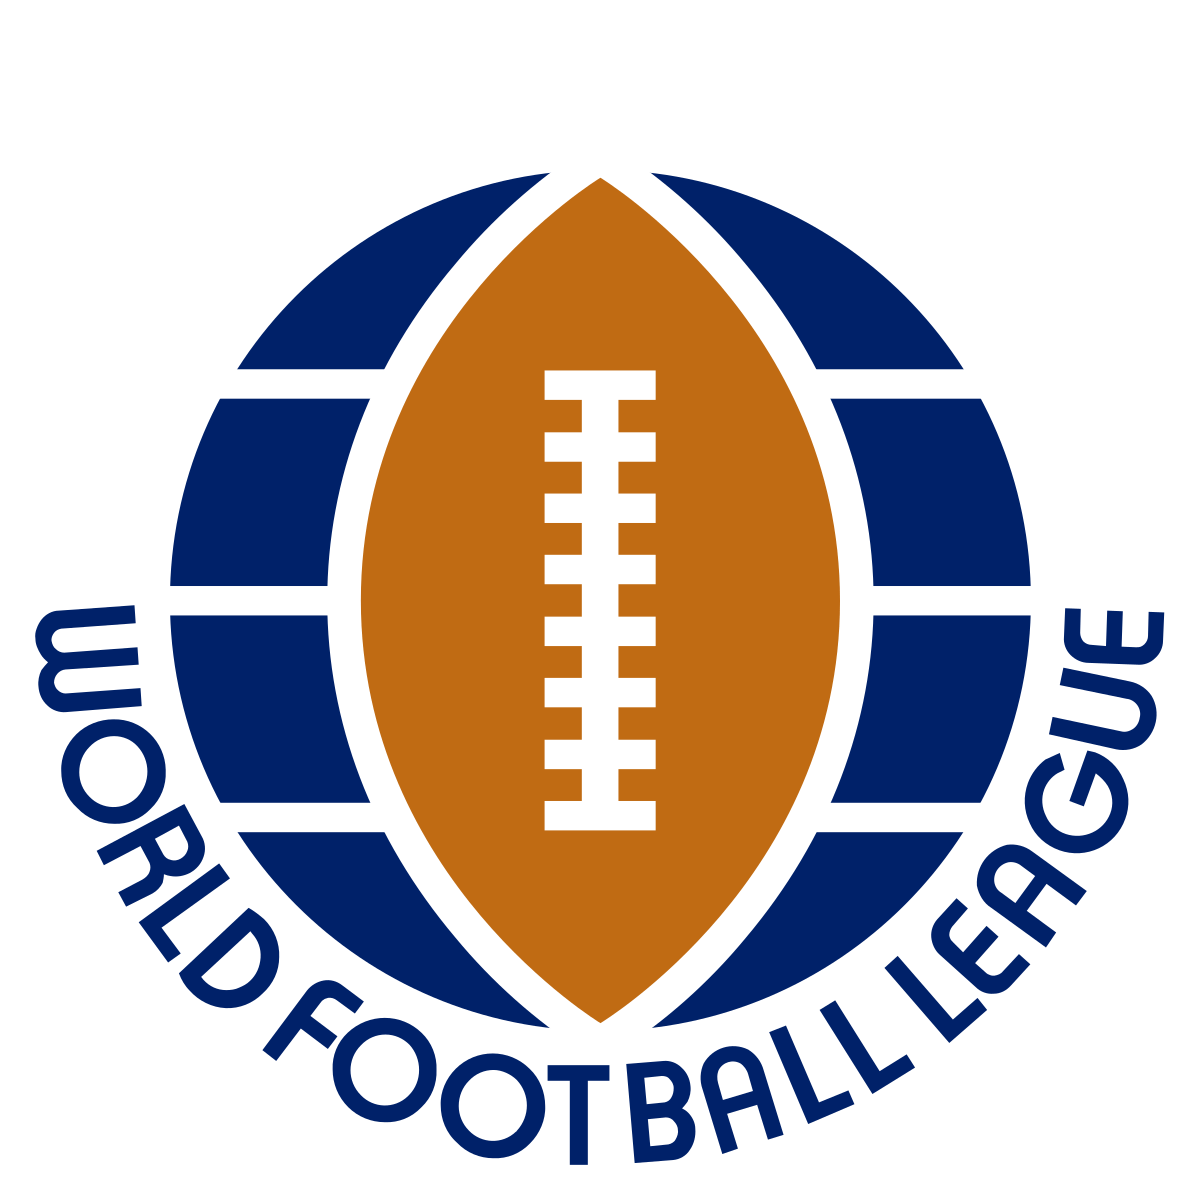 LC Football Logo - World Football League